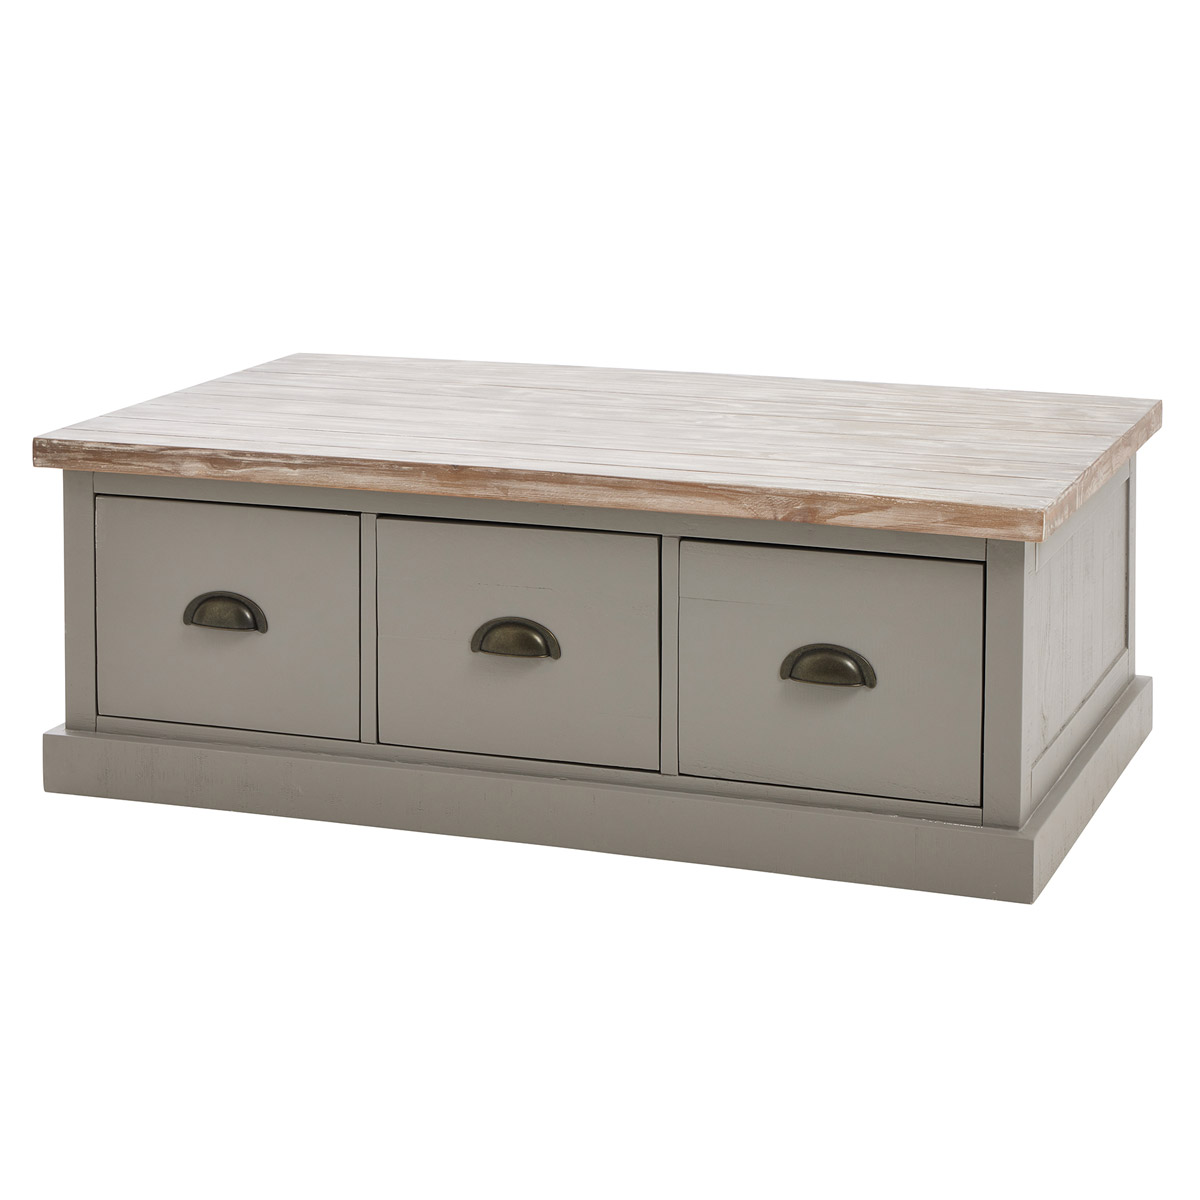 Grey Coffee Table with Drawer Storage - Oxbridge Range